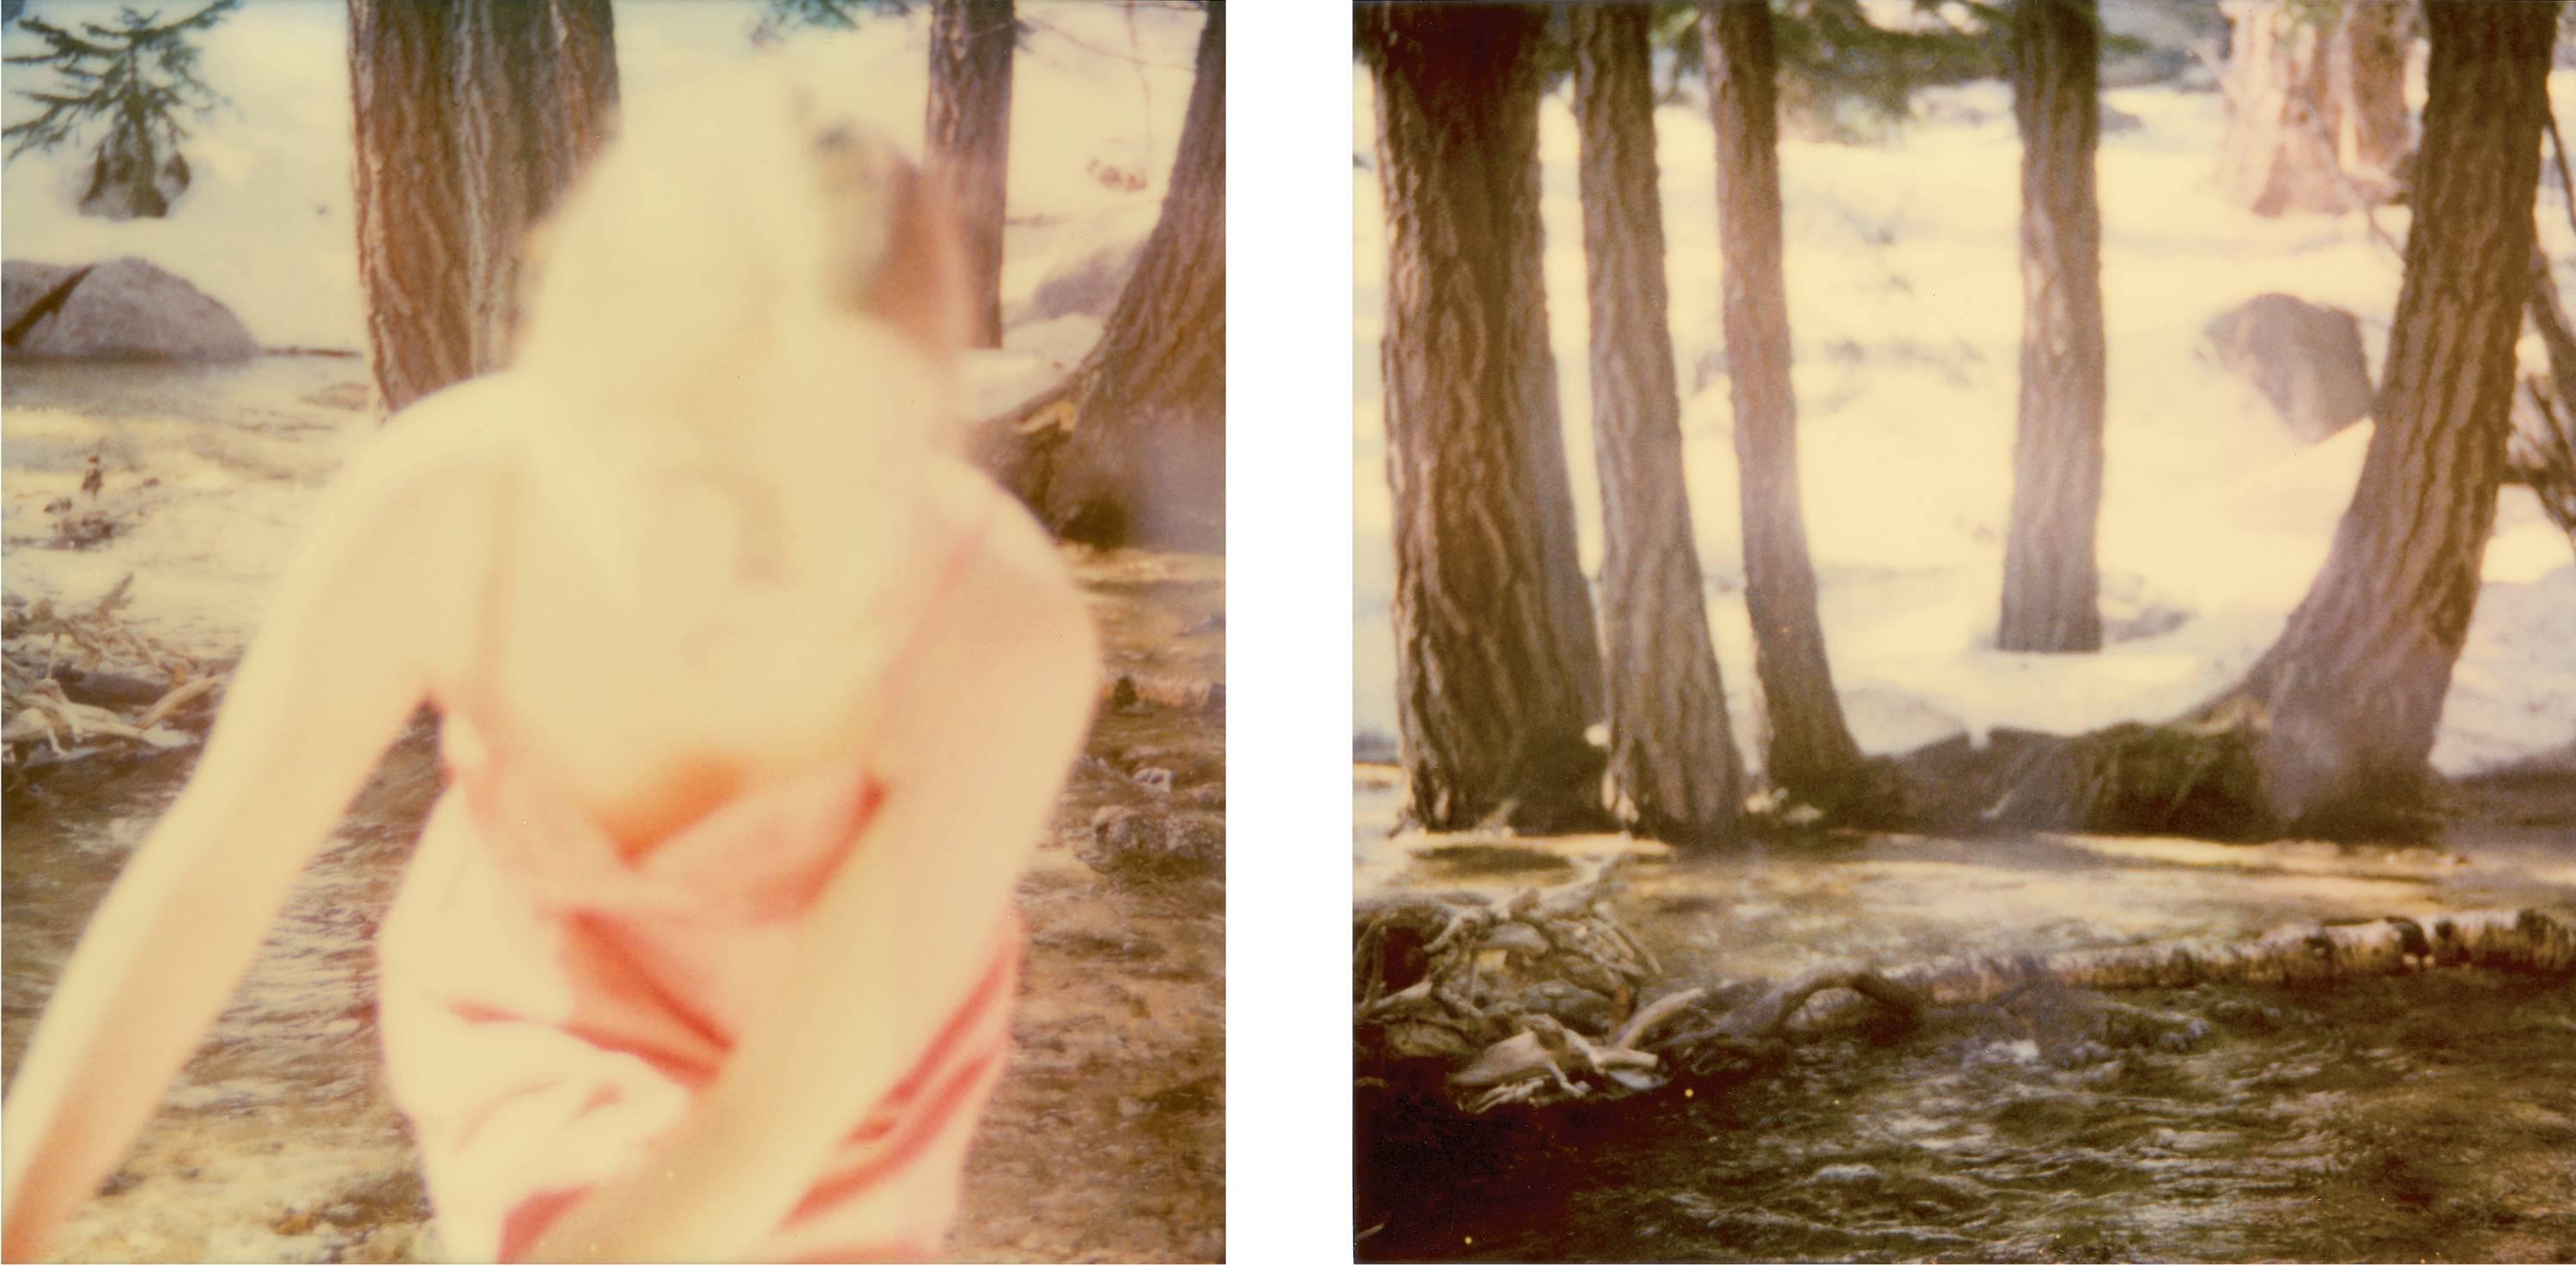 Stefanie Schneider Portrait Photograph - Fairytales - diptych, 128x125cm each - Contemporary, 21st Century, Polaroid